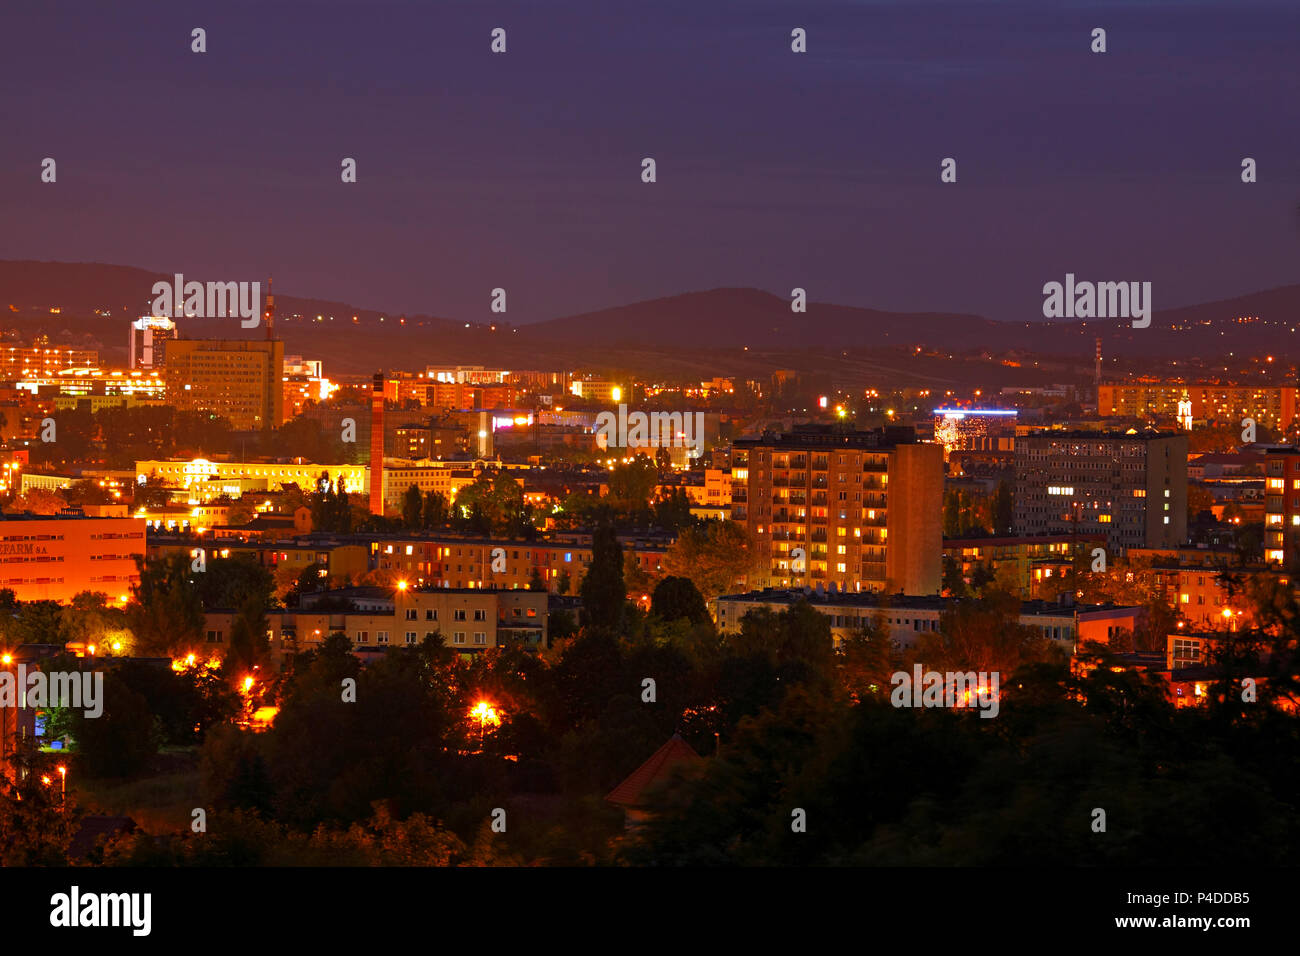 Night shot of cityscape. Poland, Kielce, The Holy Cross Mountains. Stock Photo